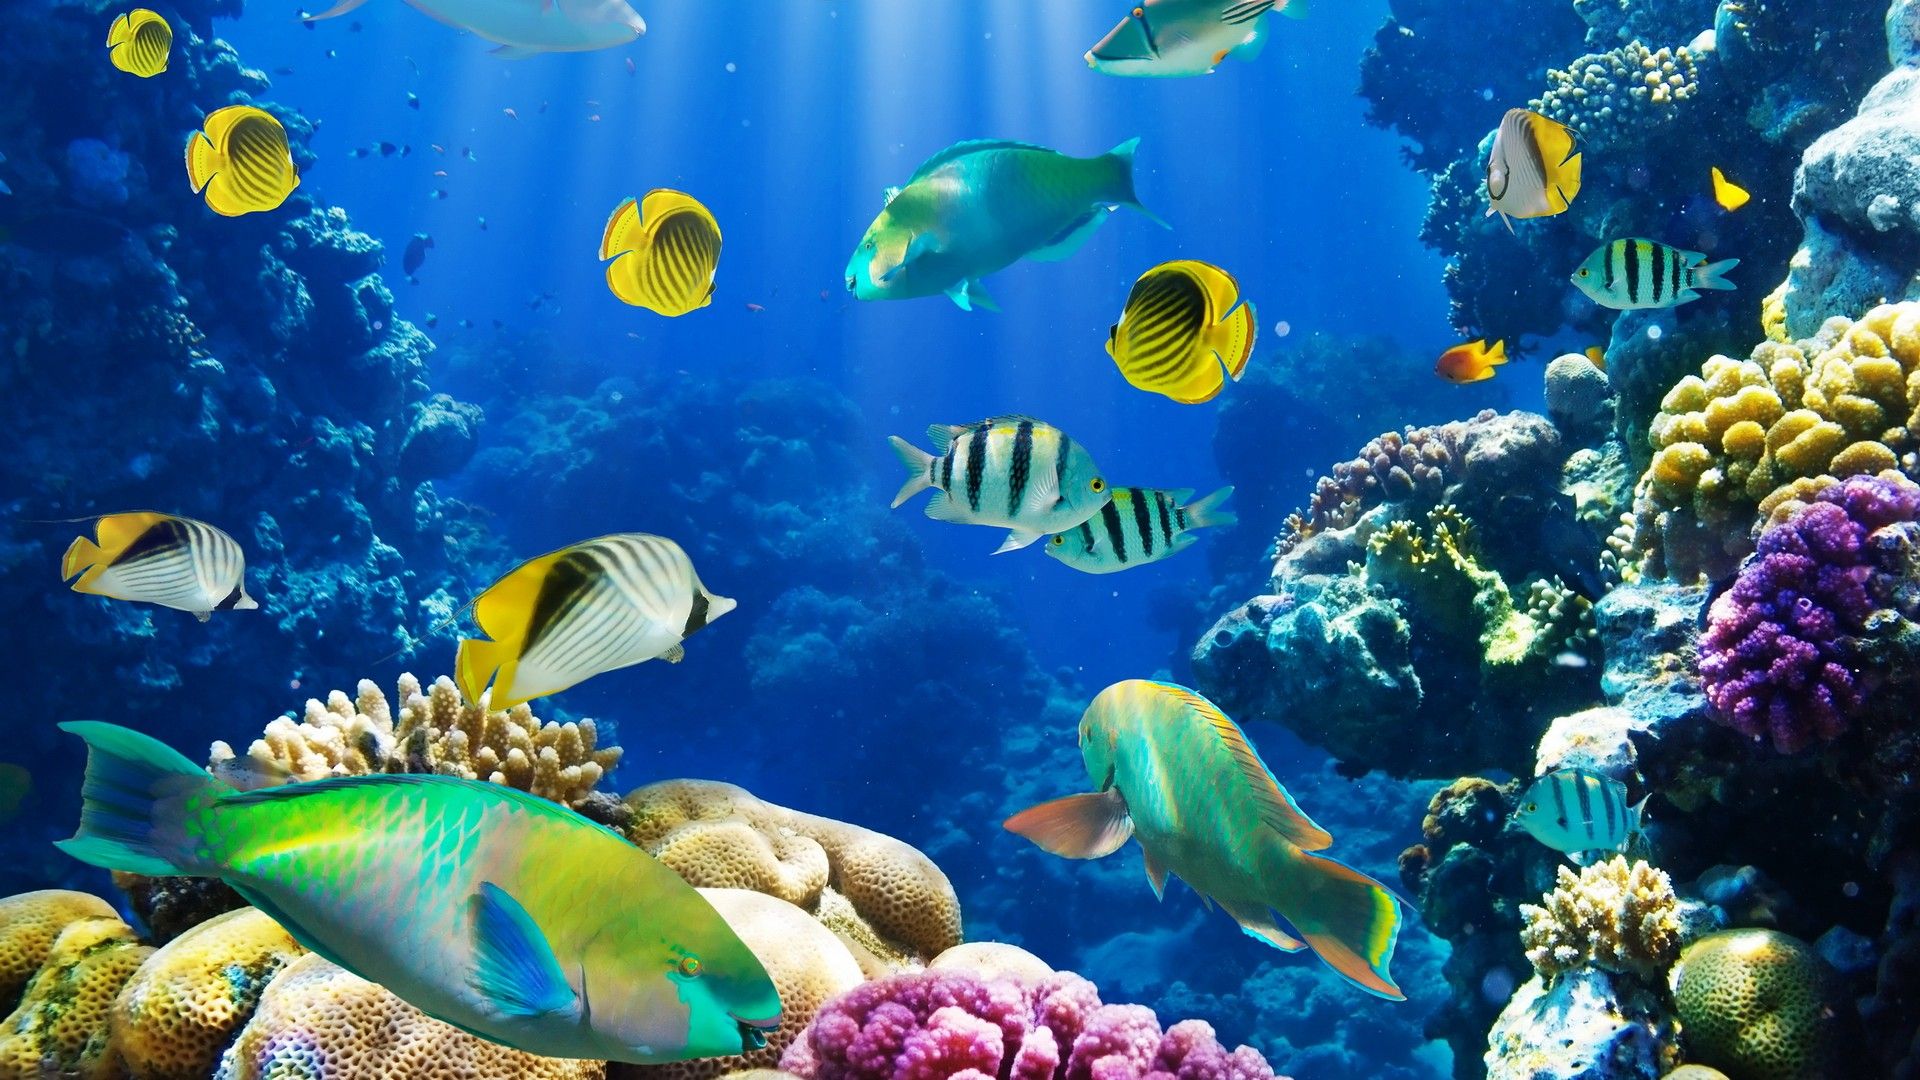 Fish tank desktop hd wallpaper 3D